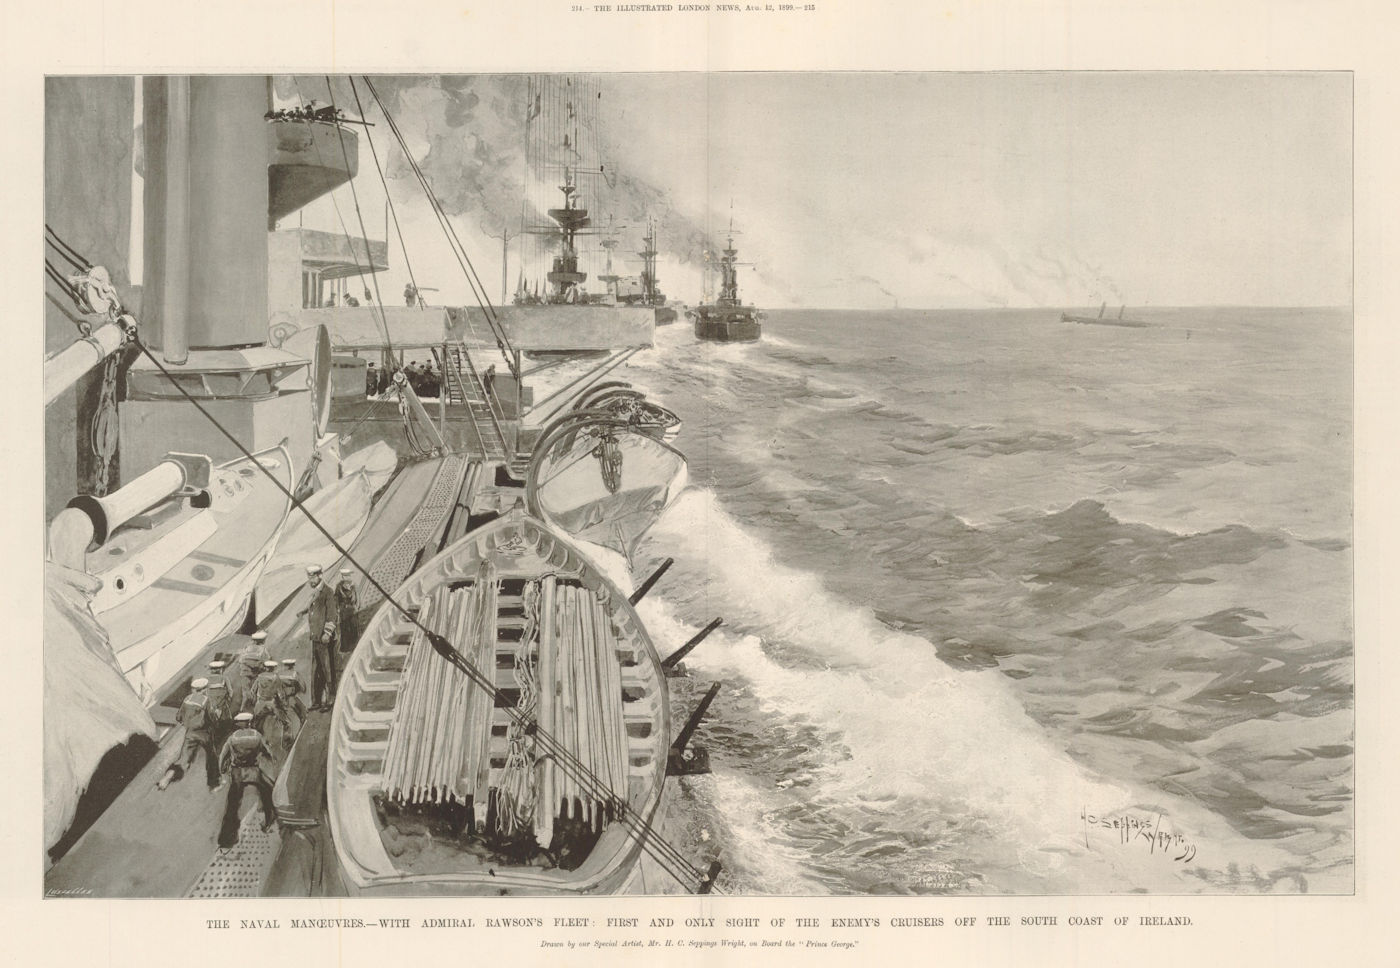 Royal Naval Manoeuvres. Admiral Rawson's Fleet. South Coast of Ireland 1899